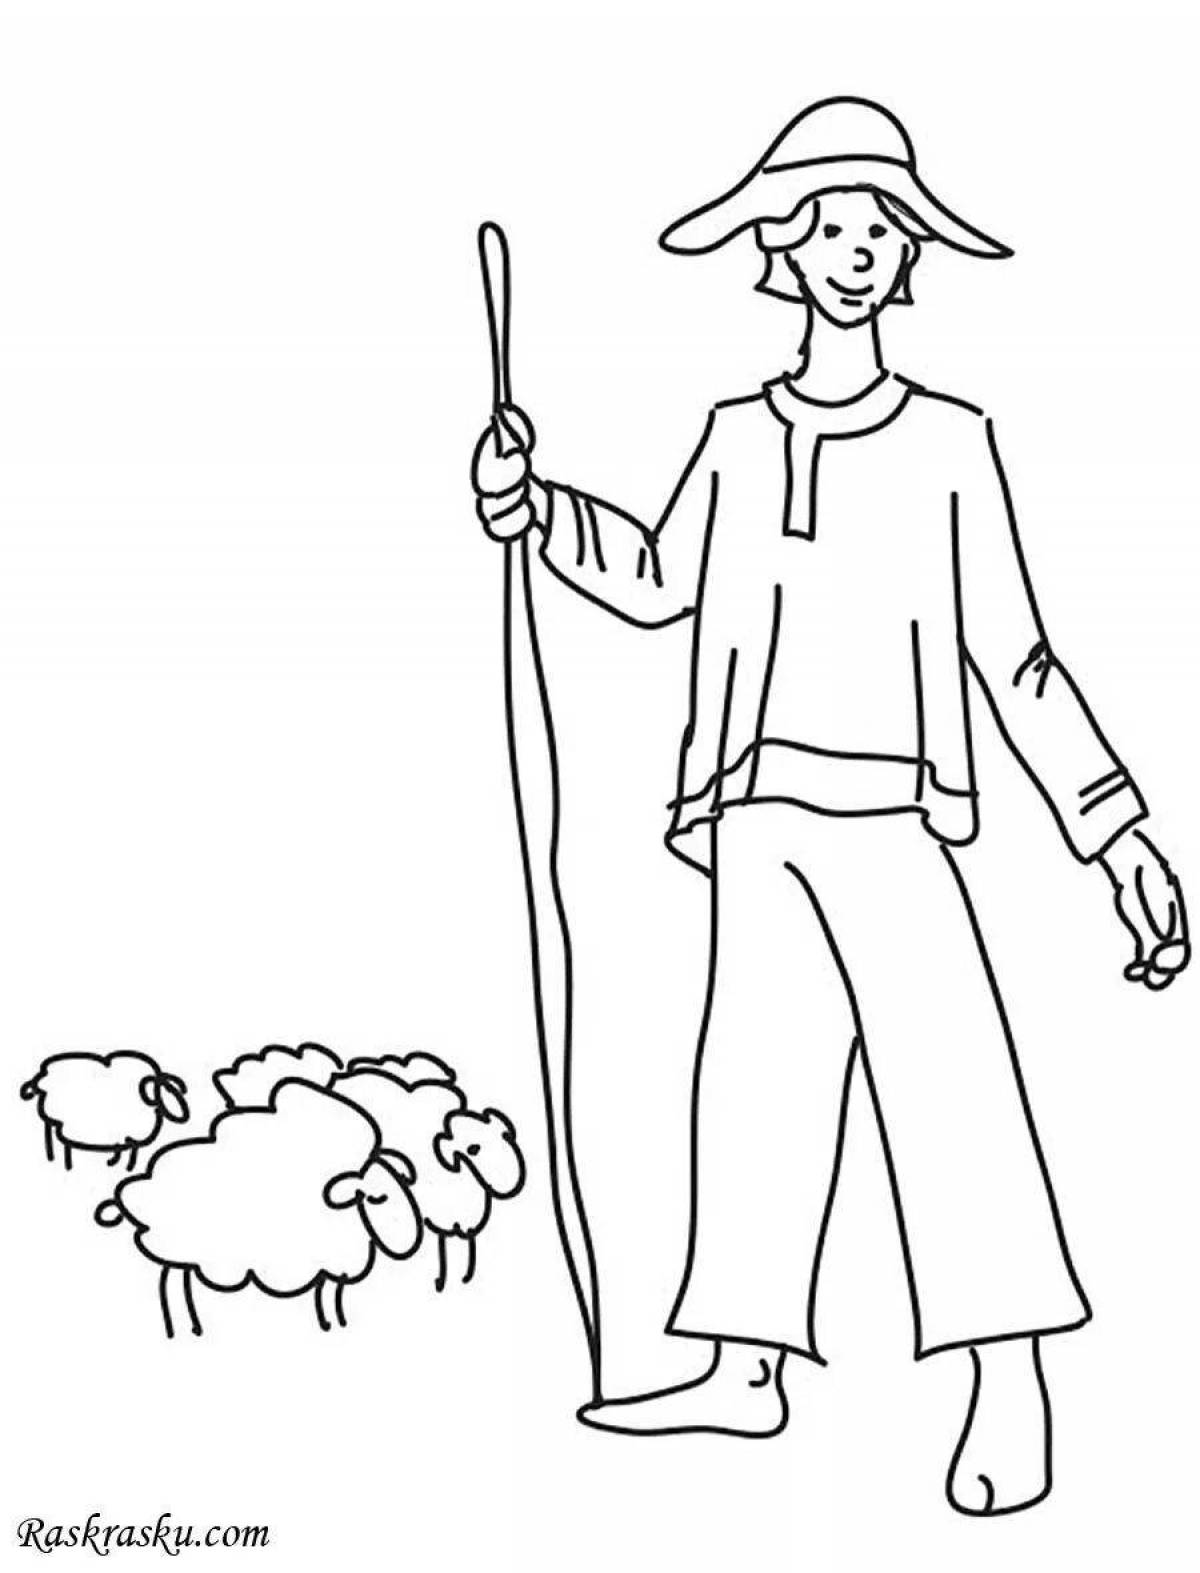 Exciting coloring shepherd lel